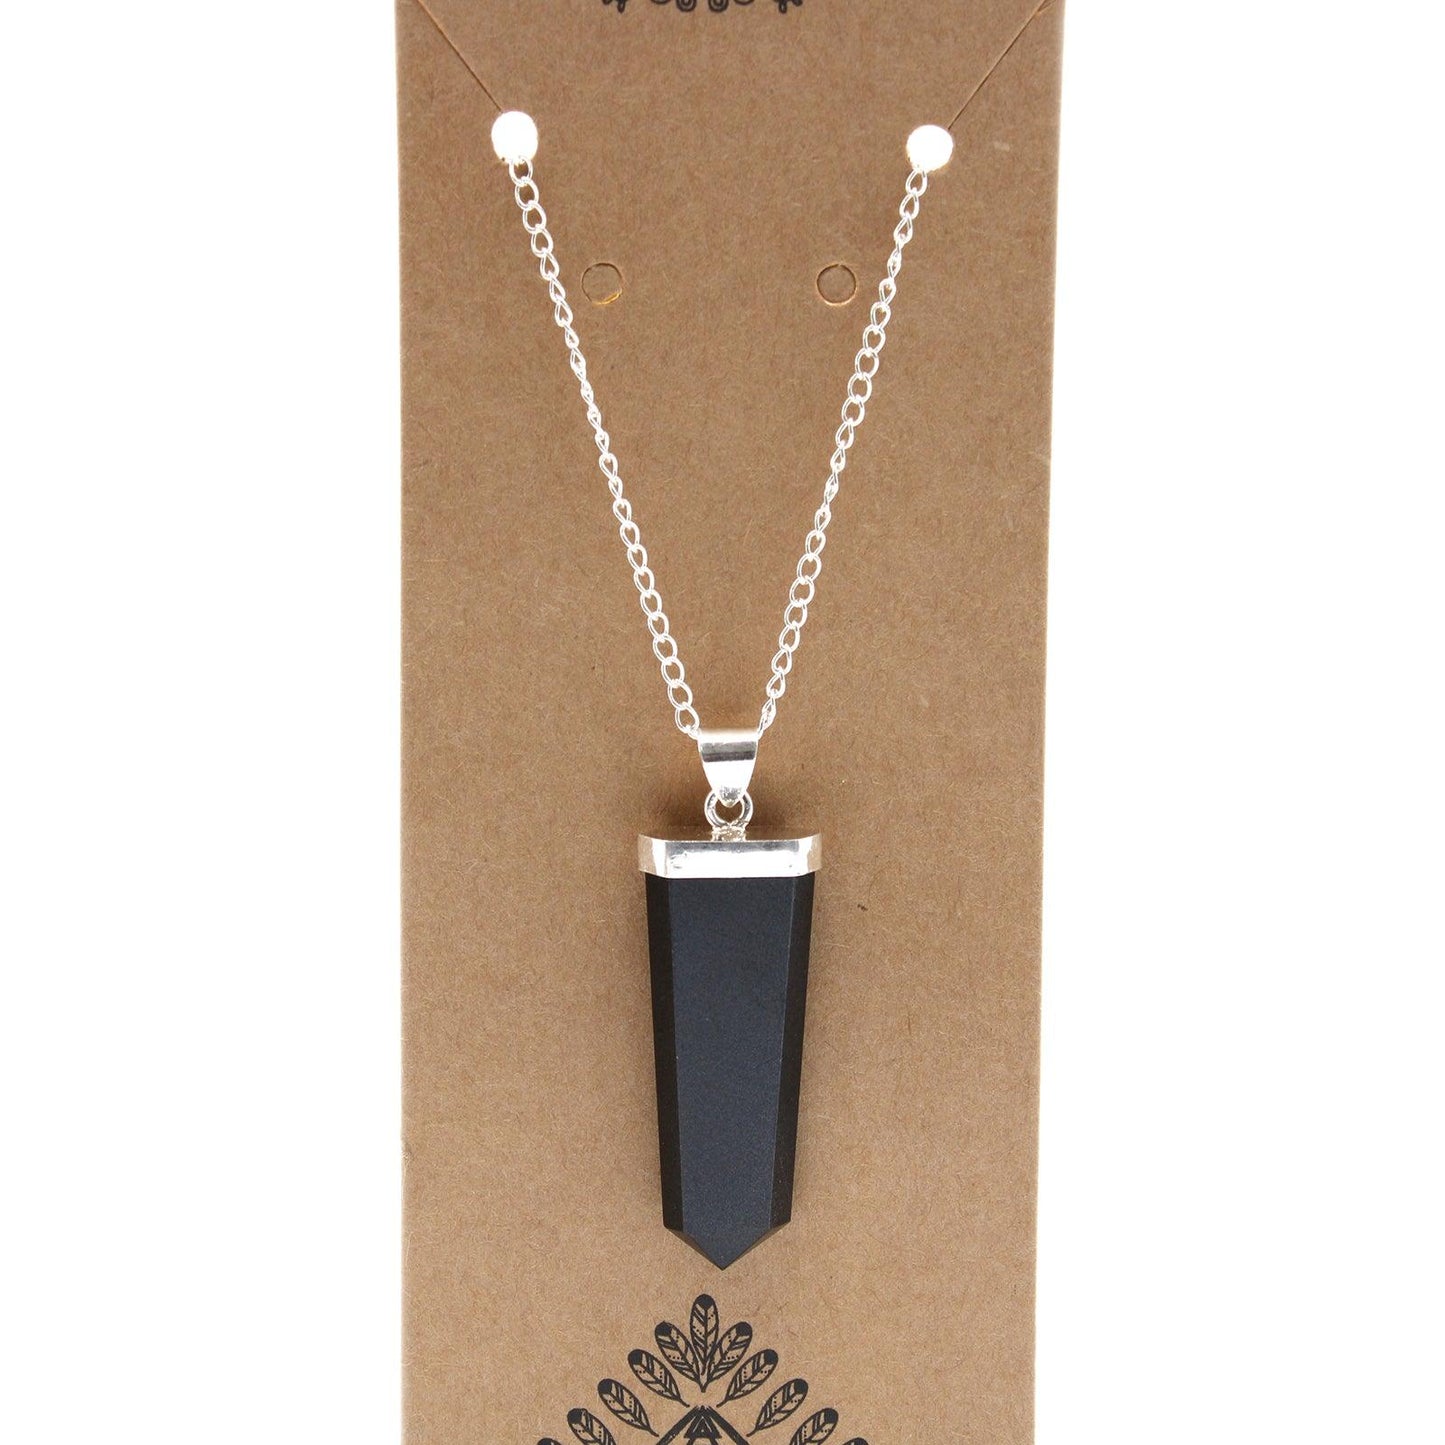 Gemstone Flat Pencil Pendant Necklace - Black Agate - Free Pouch